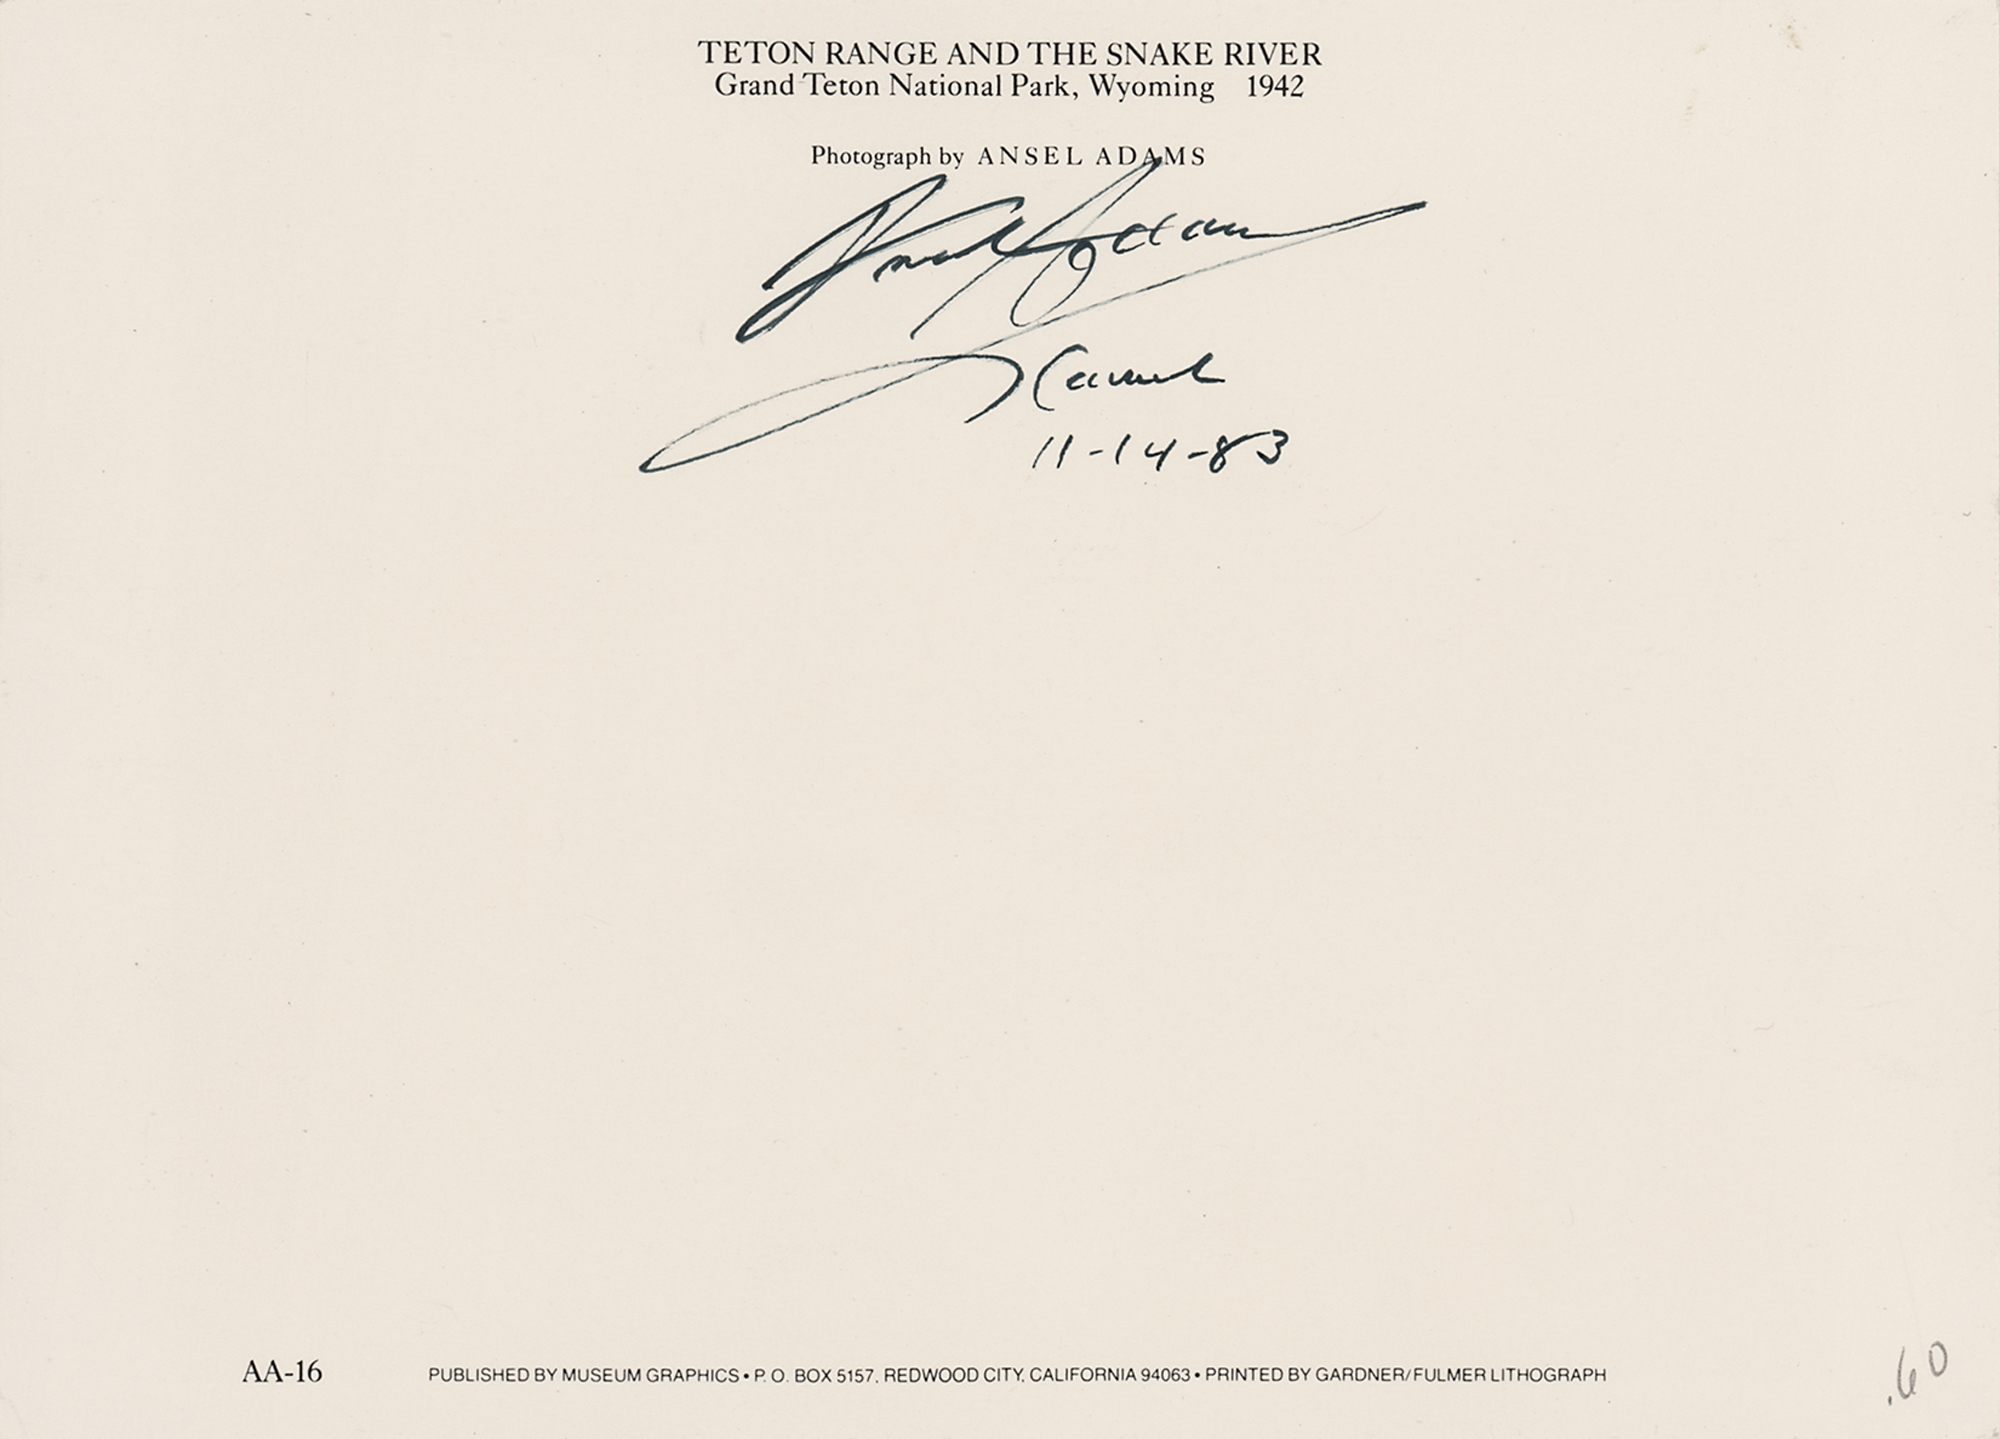 Sold at Auction: Steven Adams, STEVEN ADAMS SIGNED Autographed